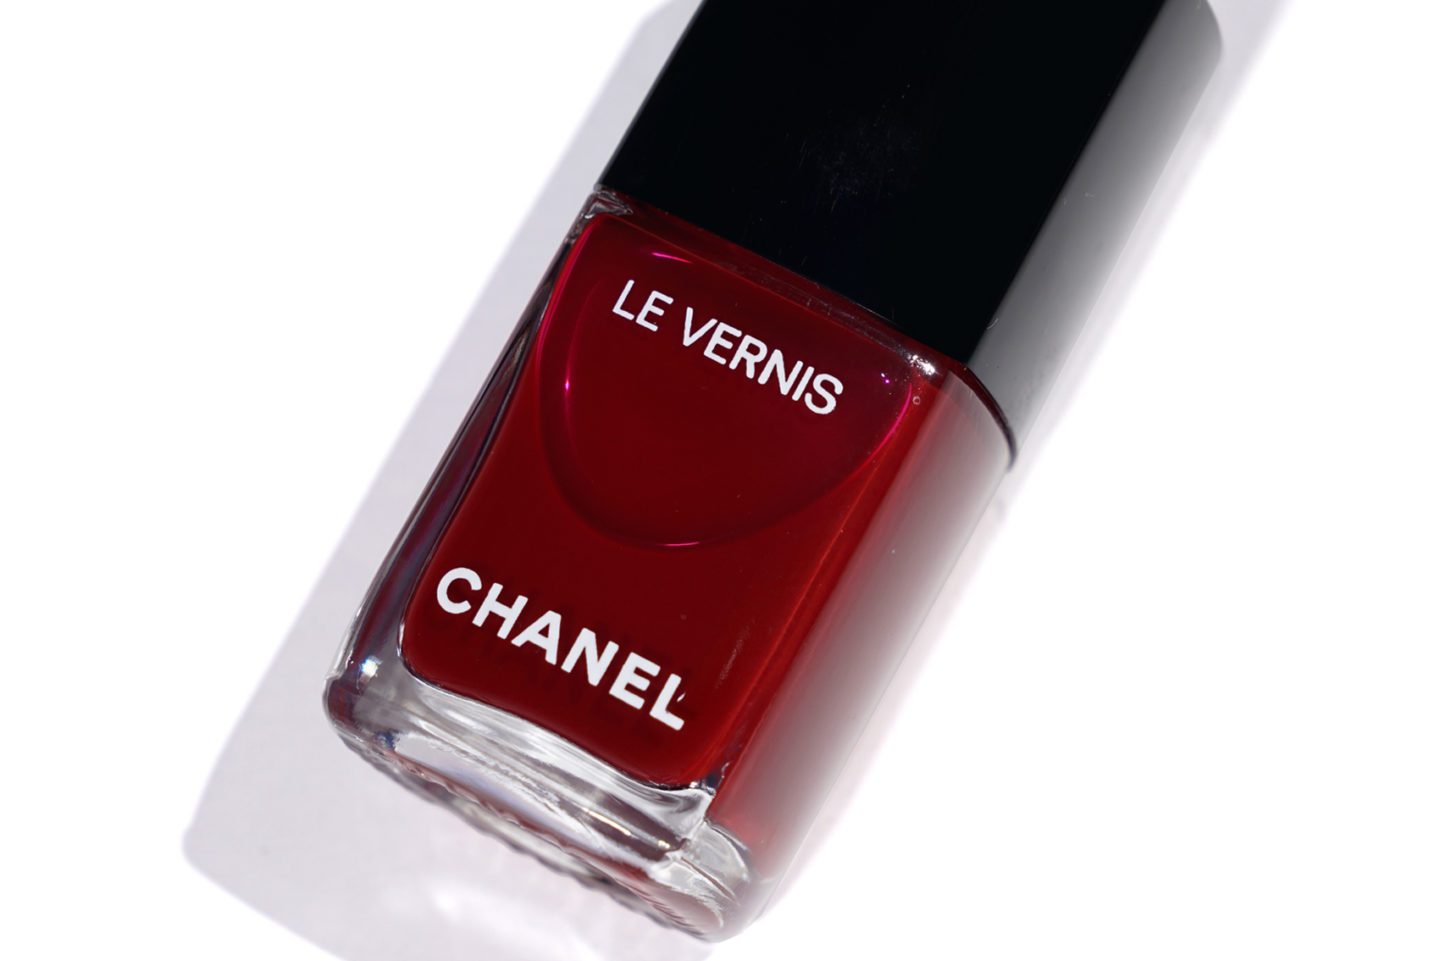 Chanel Le Vernis Emblematique | The Beauty Look Book